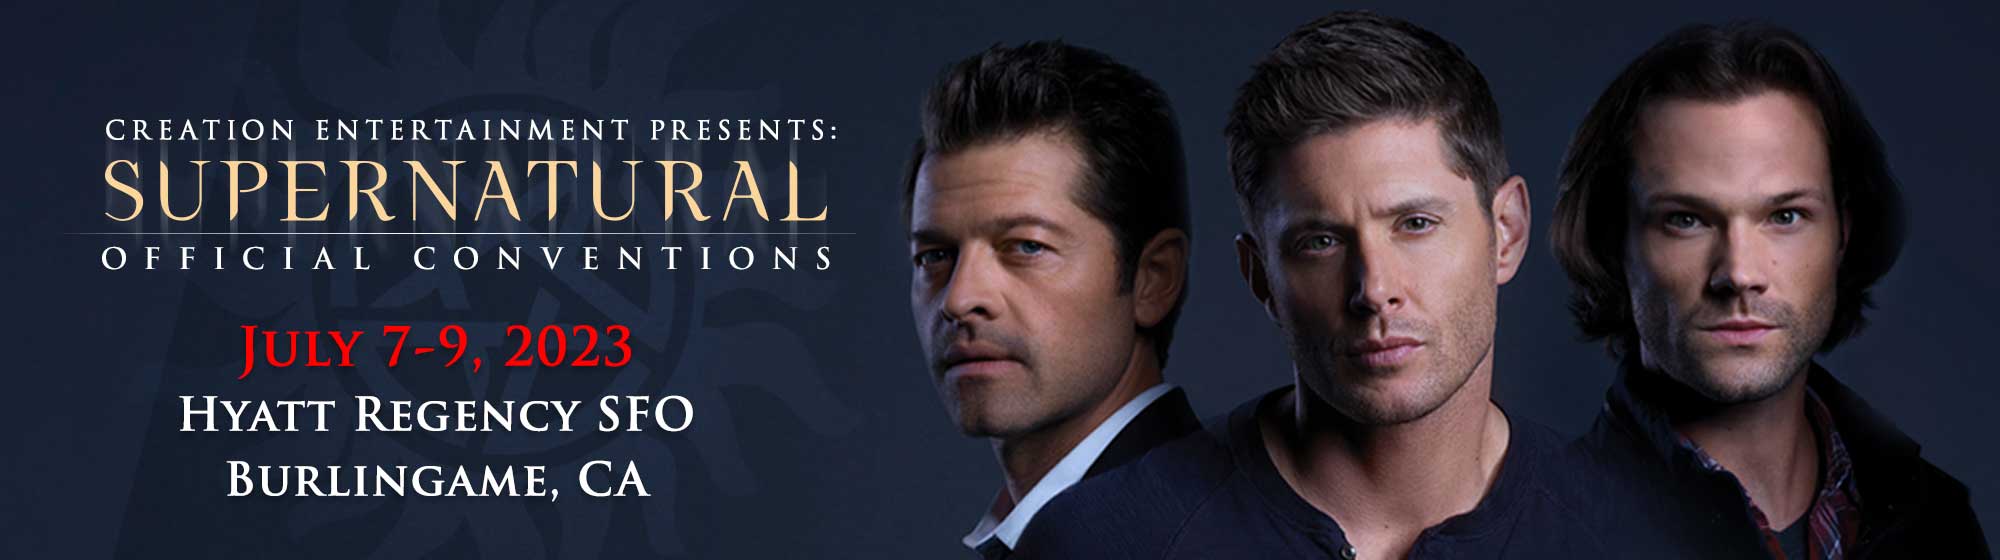 Creation Supernatural Offical Fan Convention starring Jensen